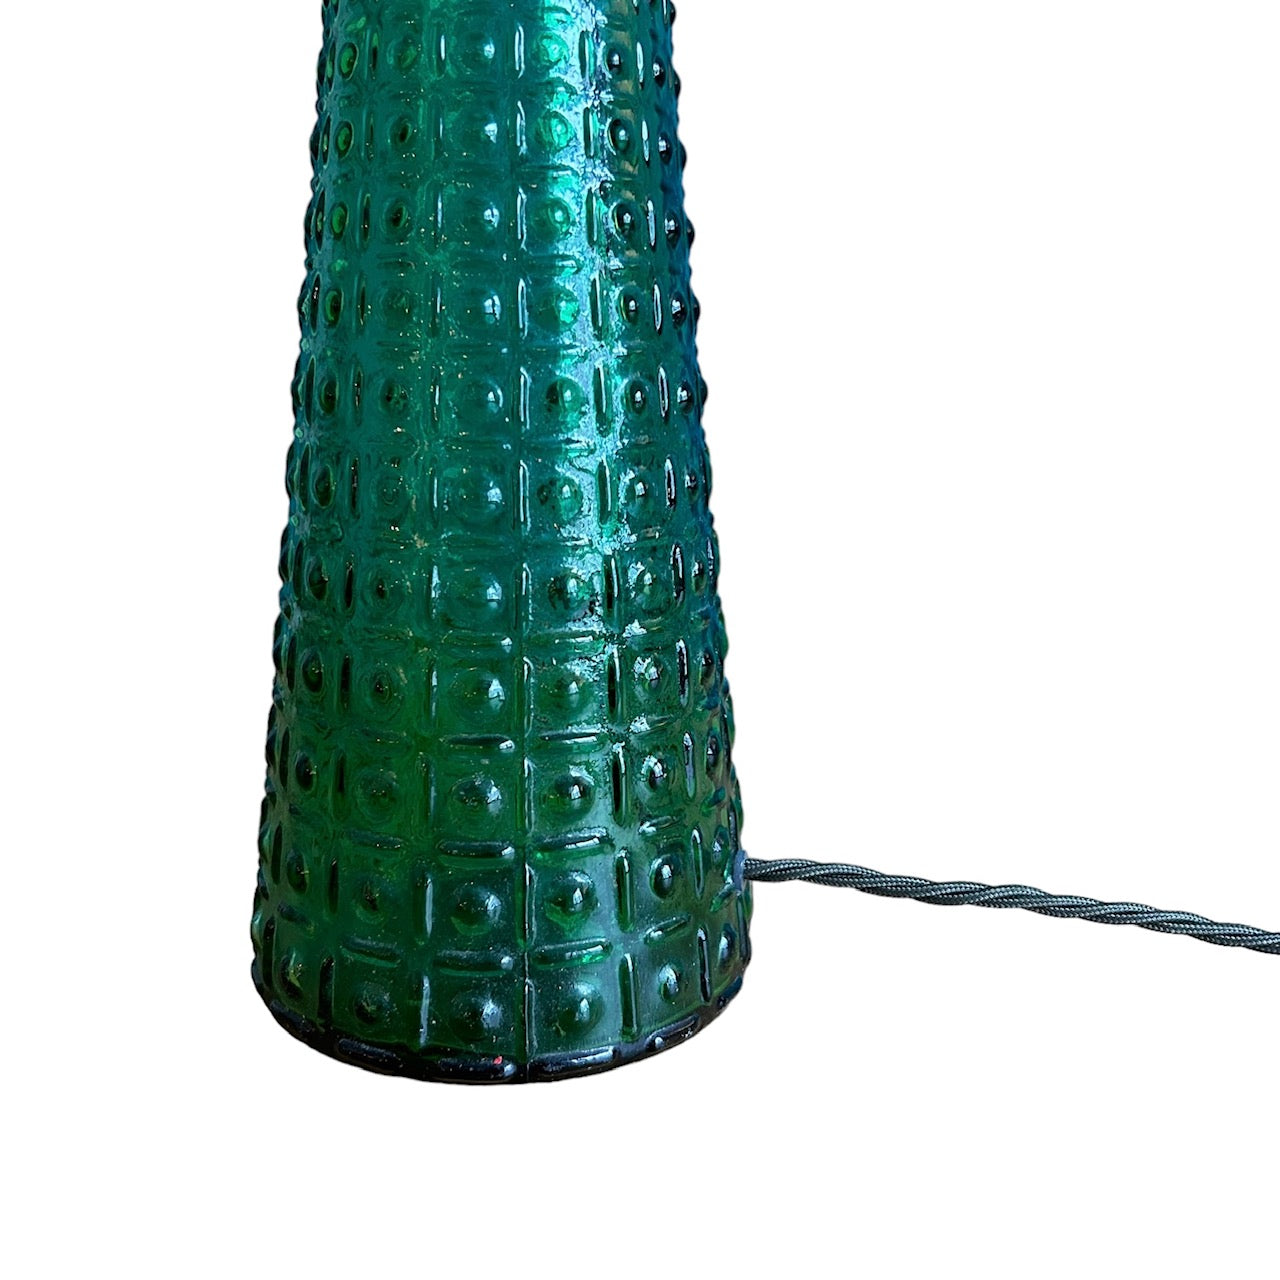 Glass cone lamp in green